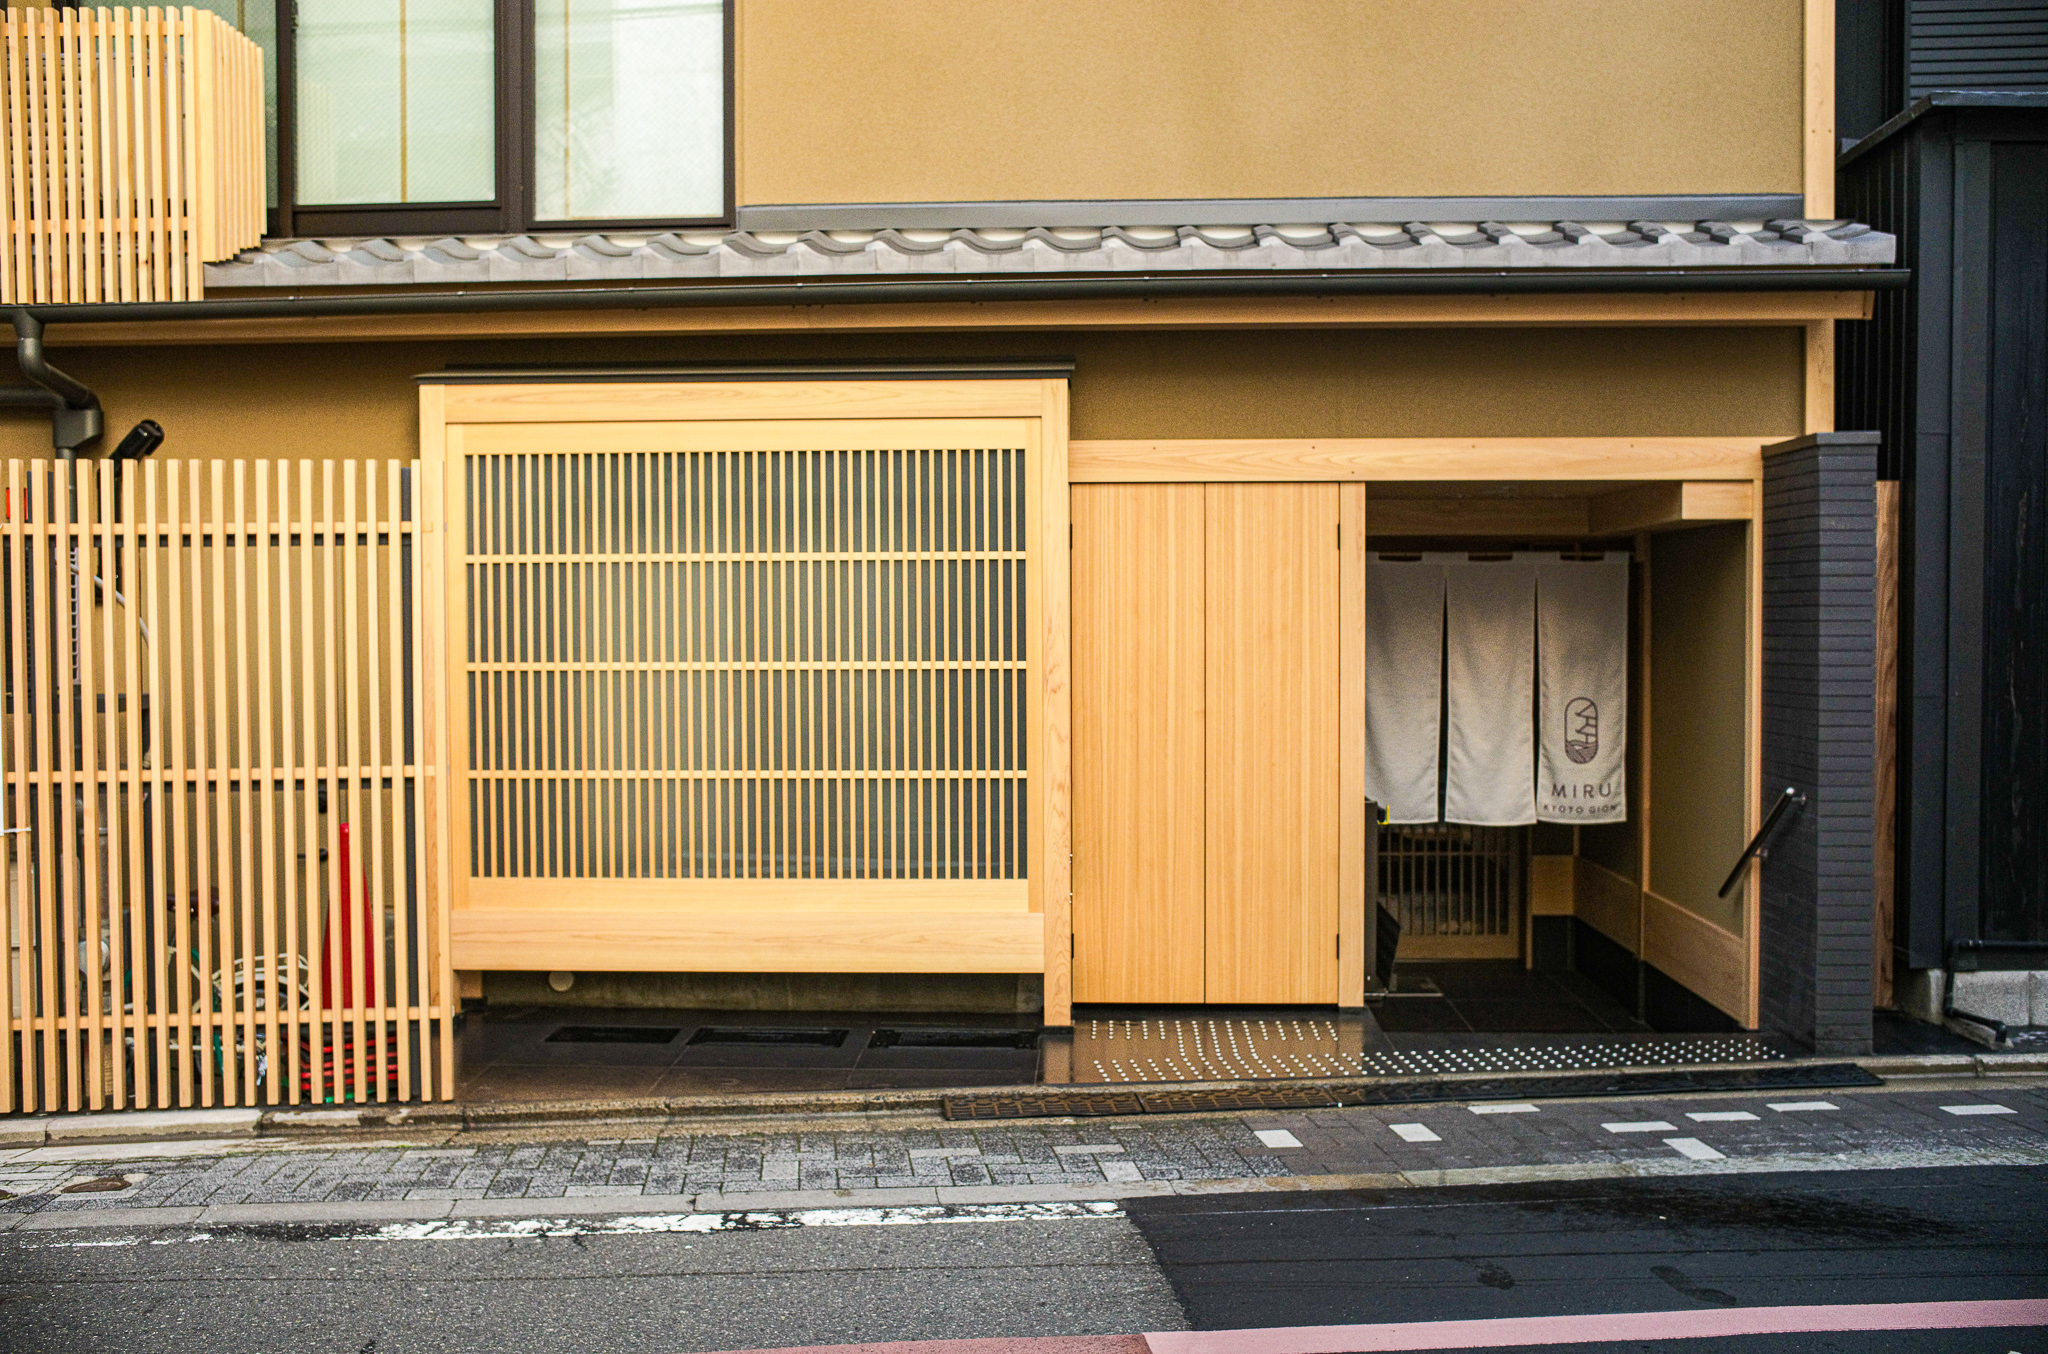 Miru Kyoto Gion image